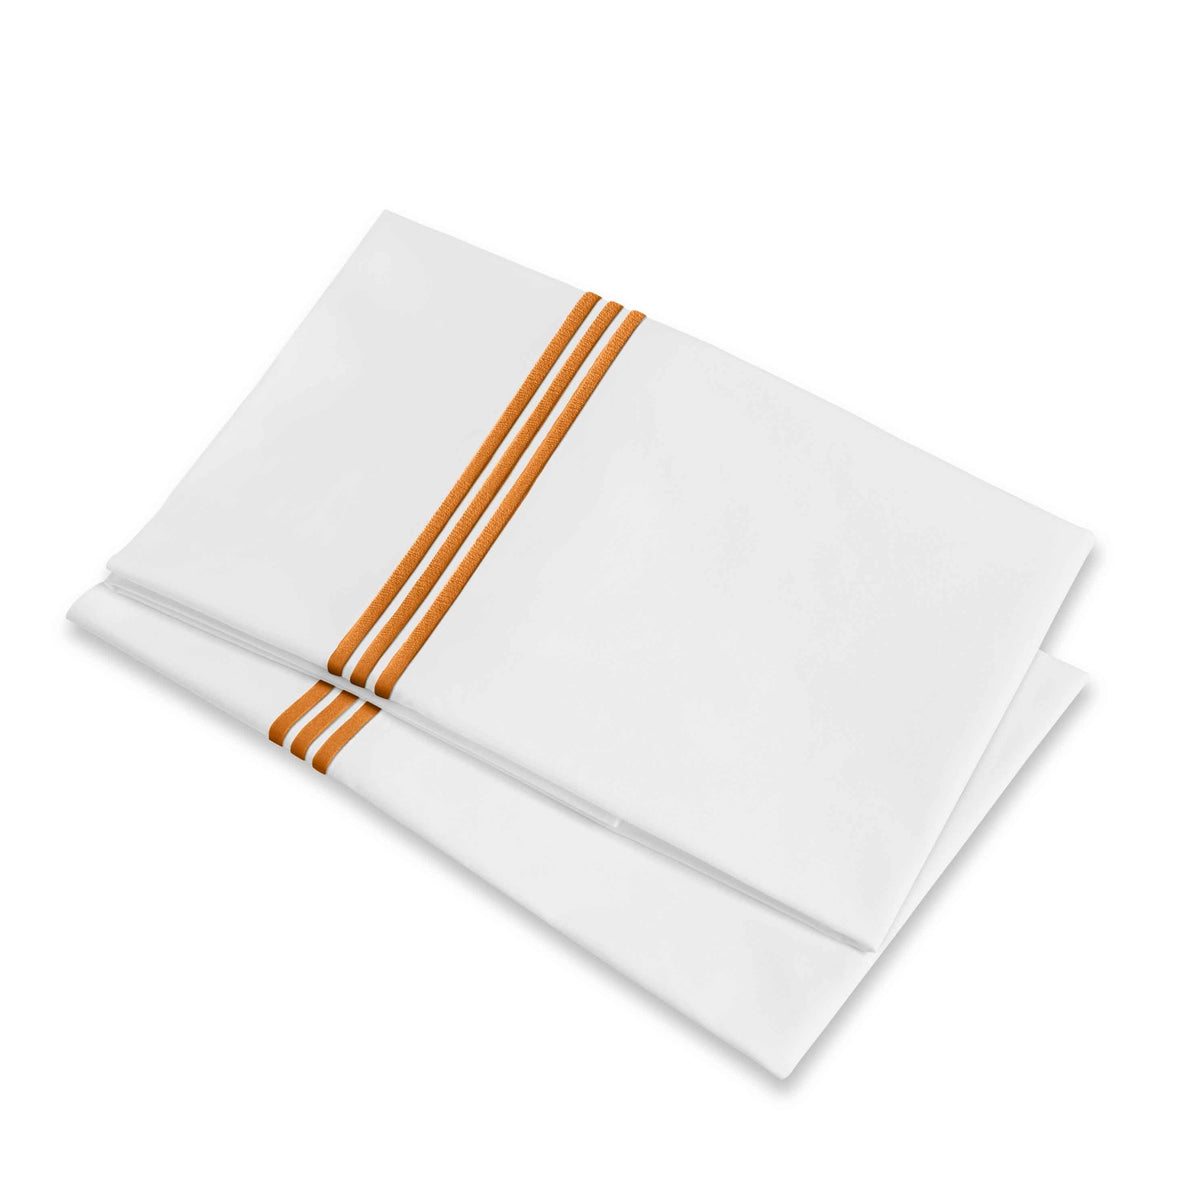 Folded Pillowcases of Signoria Platinum Percale Bedding in White/Rust Color